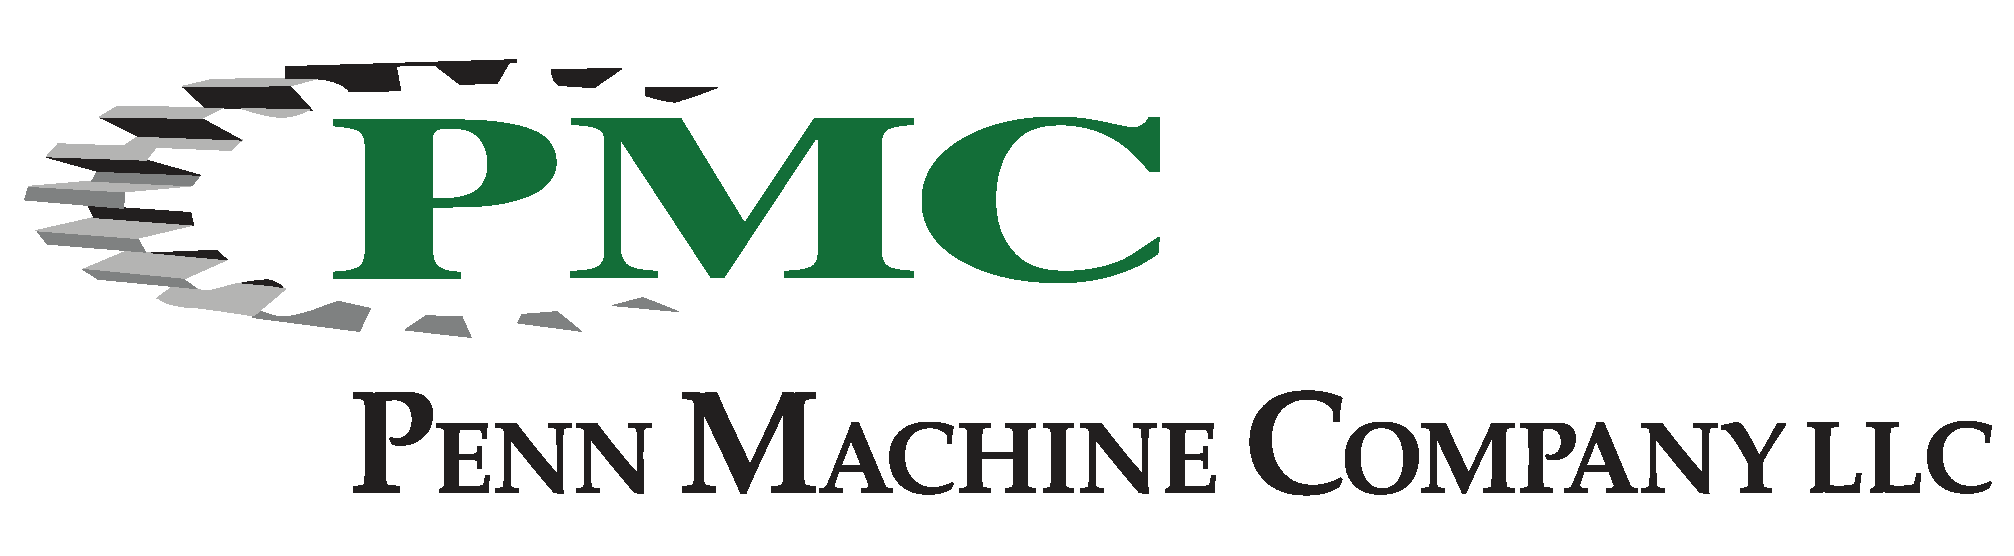 Penn Machine Logo - Sidebar